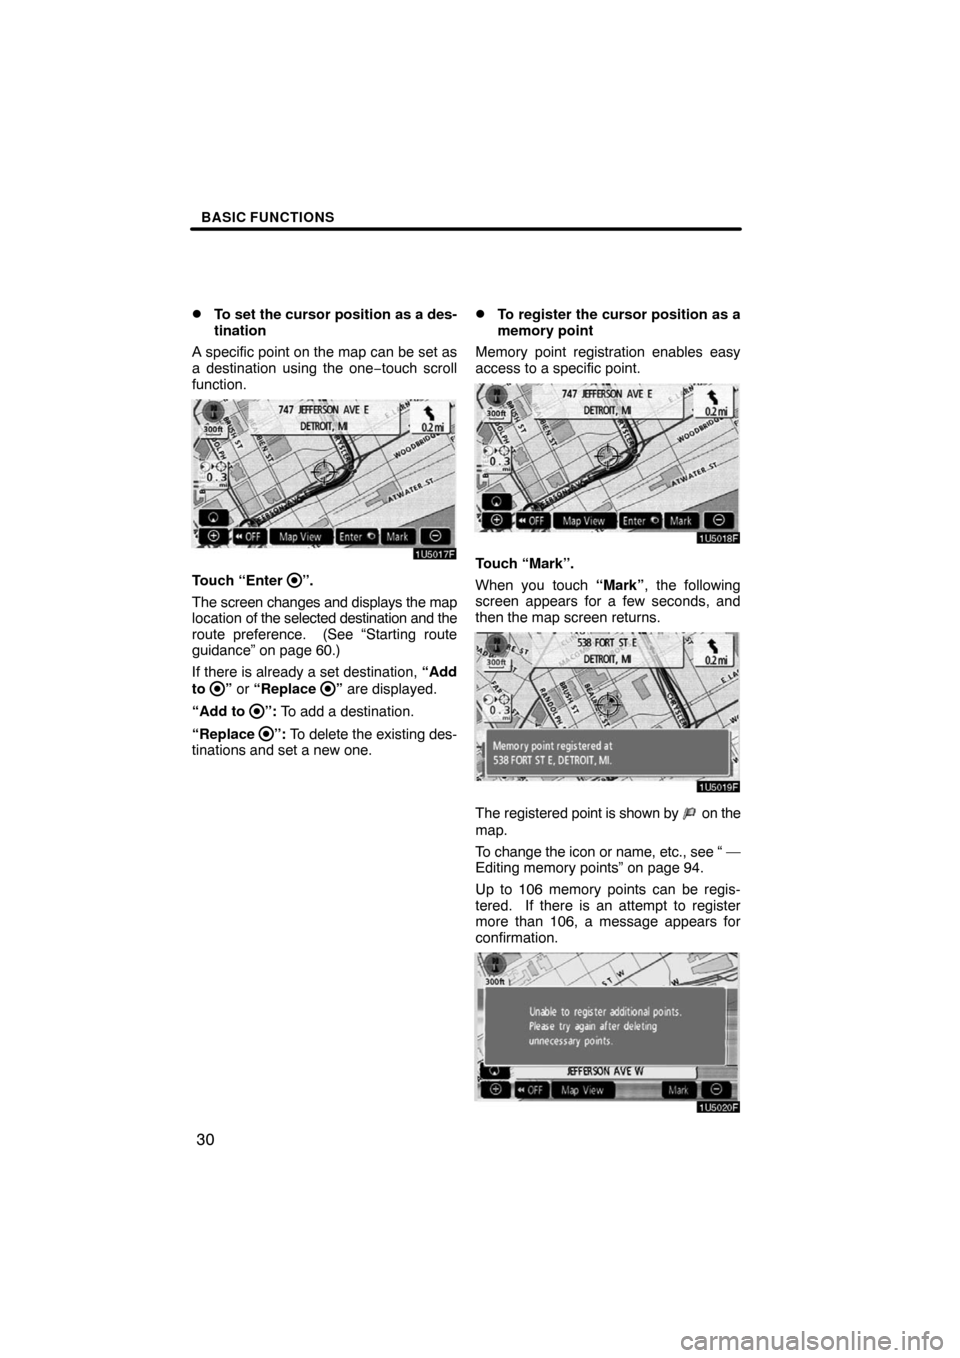 TOYOTA HIGHLANDER 2008 XU40 / 2.G Navigation Manual BASIC FUNCTIONS
30 
To set the cursor position as a des-
tination
A specific point on the map can be set as
a destination using the one−touch scroll
function.
Touch “Enter ”.
The screen changes